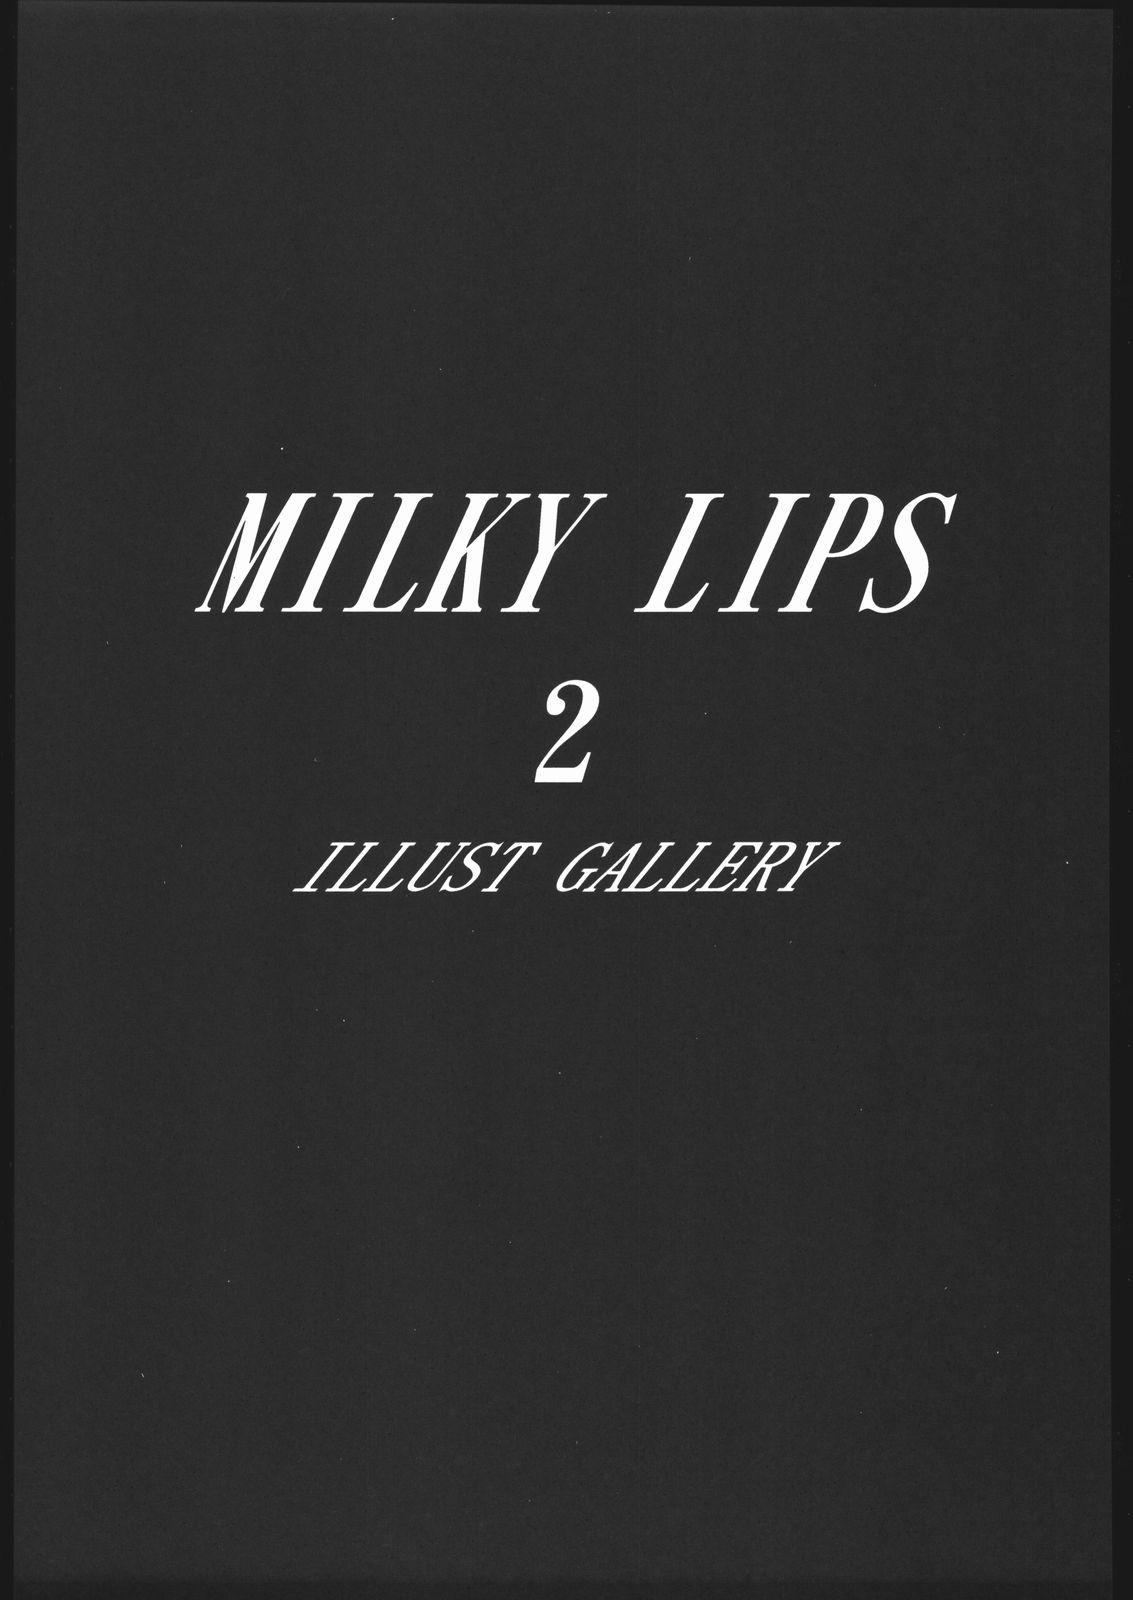 MILKY LIPS 2 45